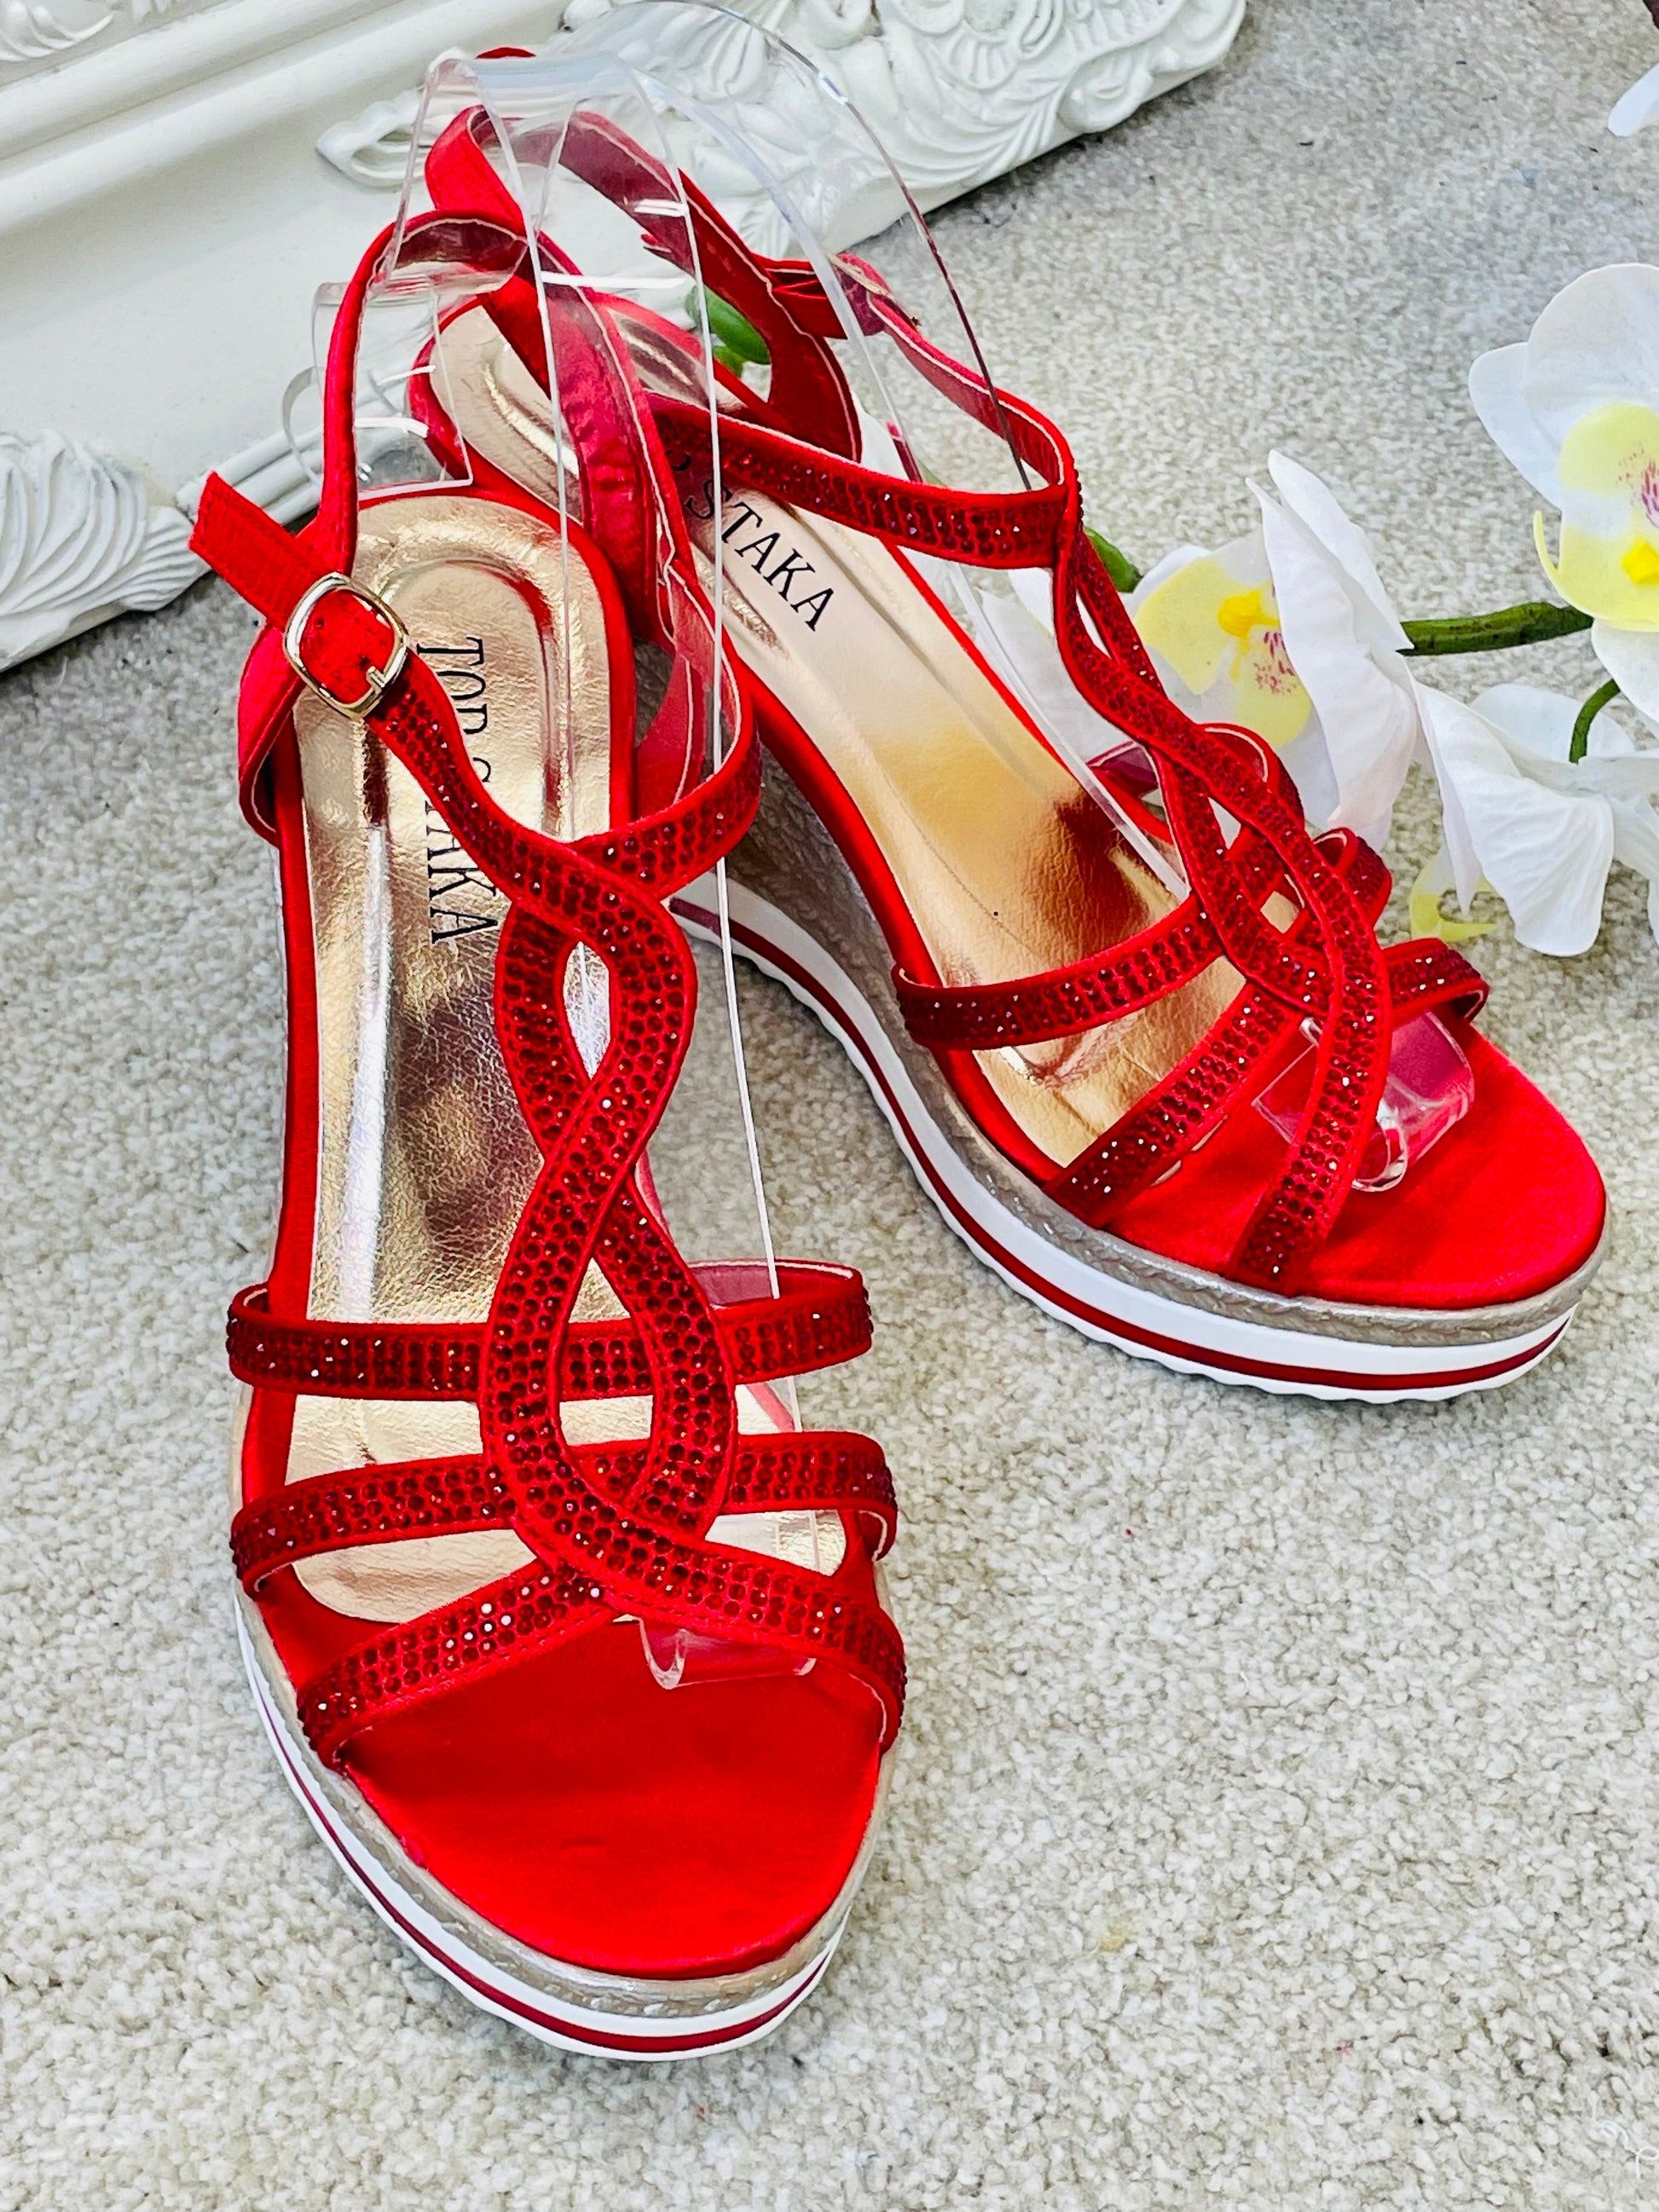 sparkly-red-wedge-heel-sandals-8919